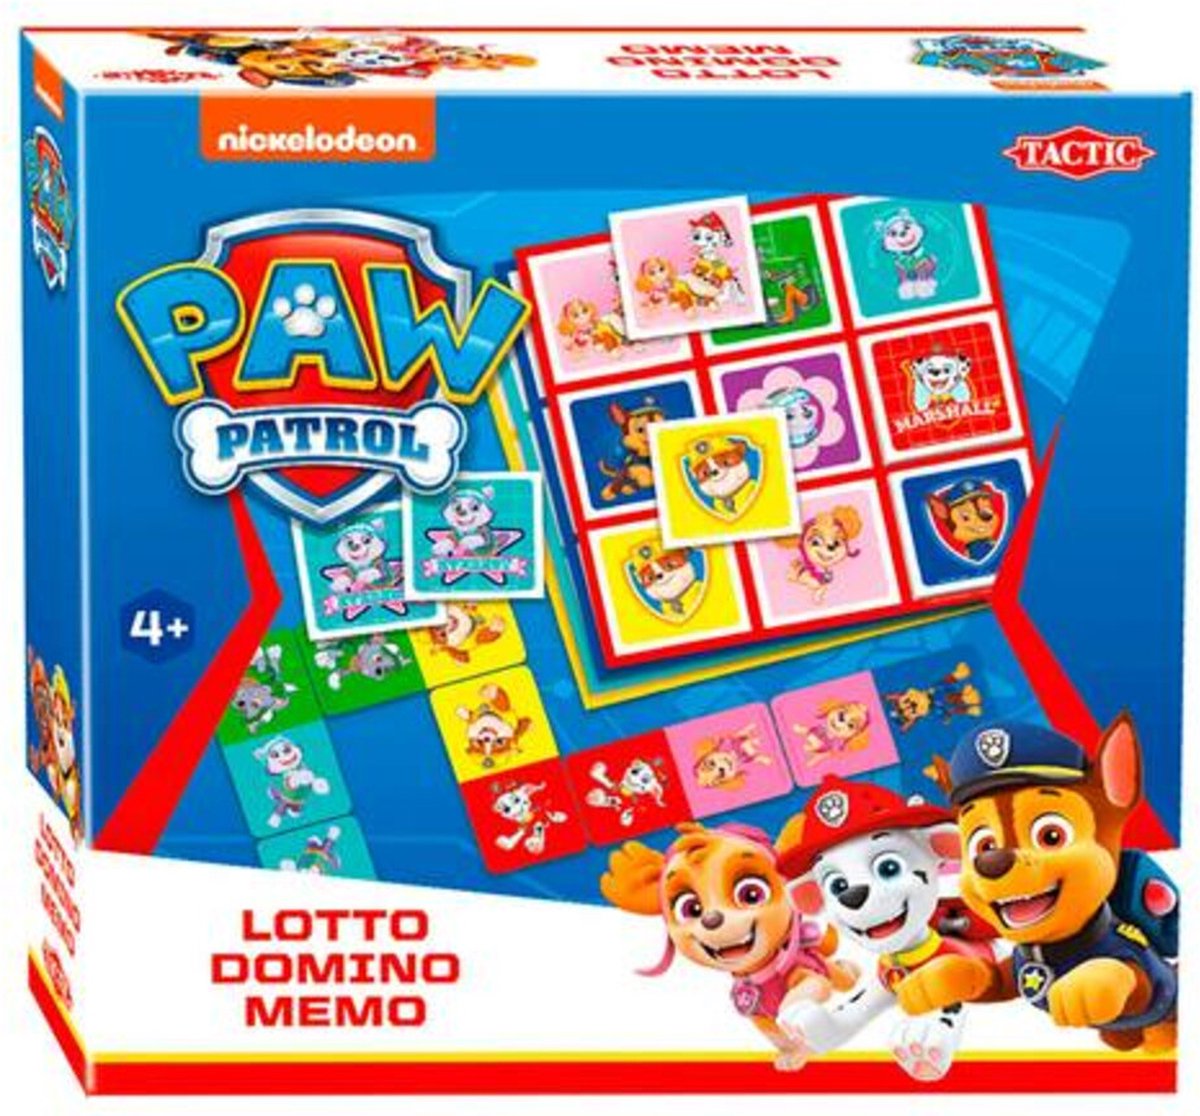 Tactic Paw Patrol 3-in-1 : Memo - Lotto - Domino - Tactic